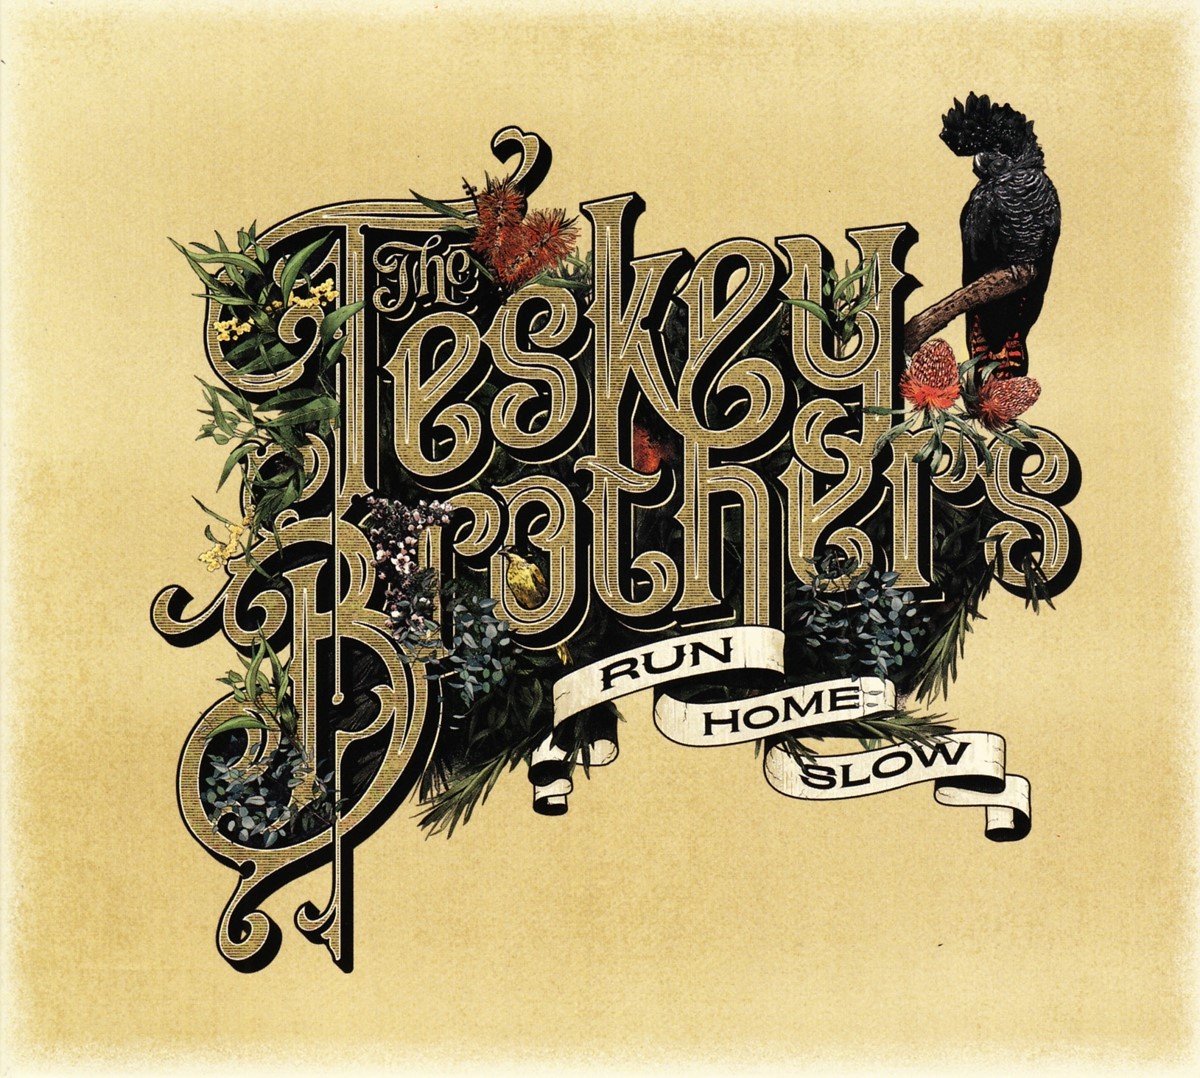 The Teskey Brothers - Run Home Slow (CD) - The Teskey Brothers